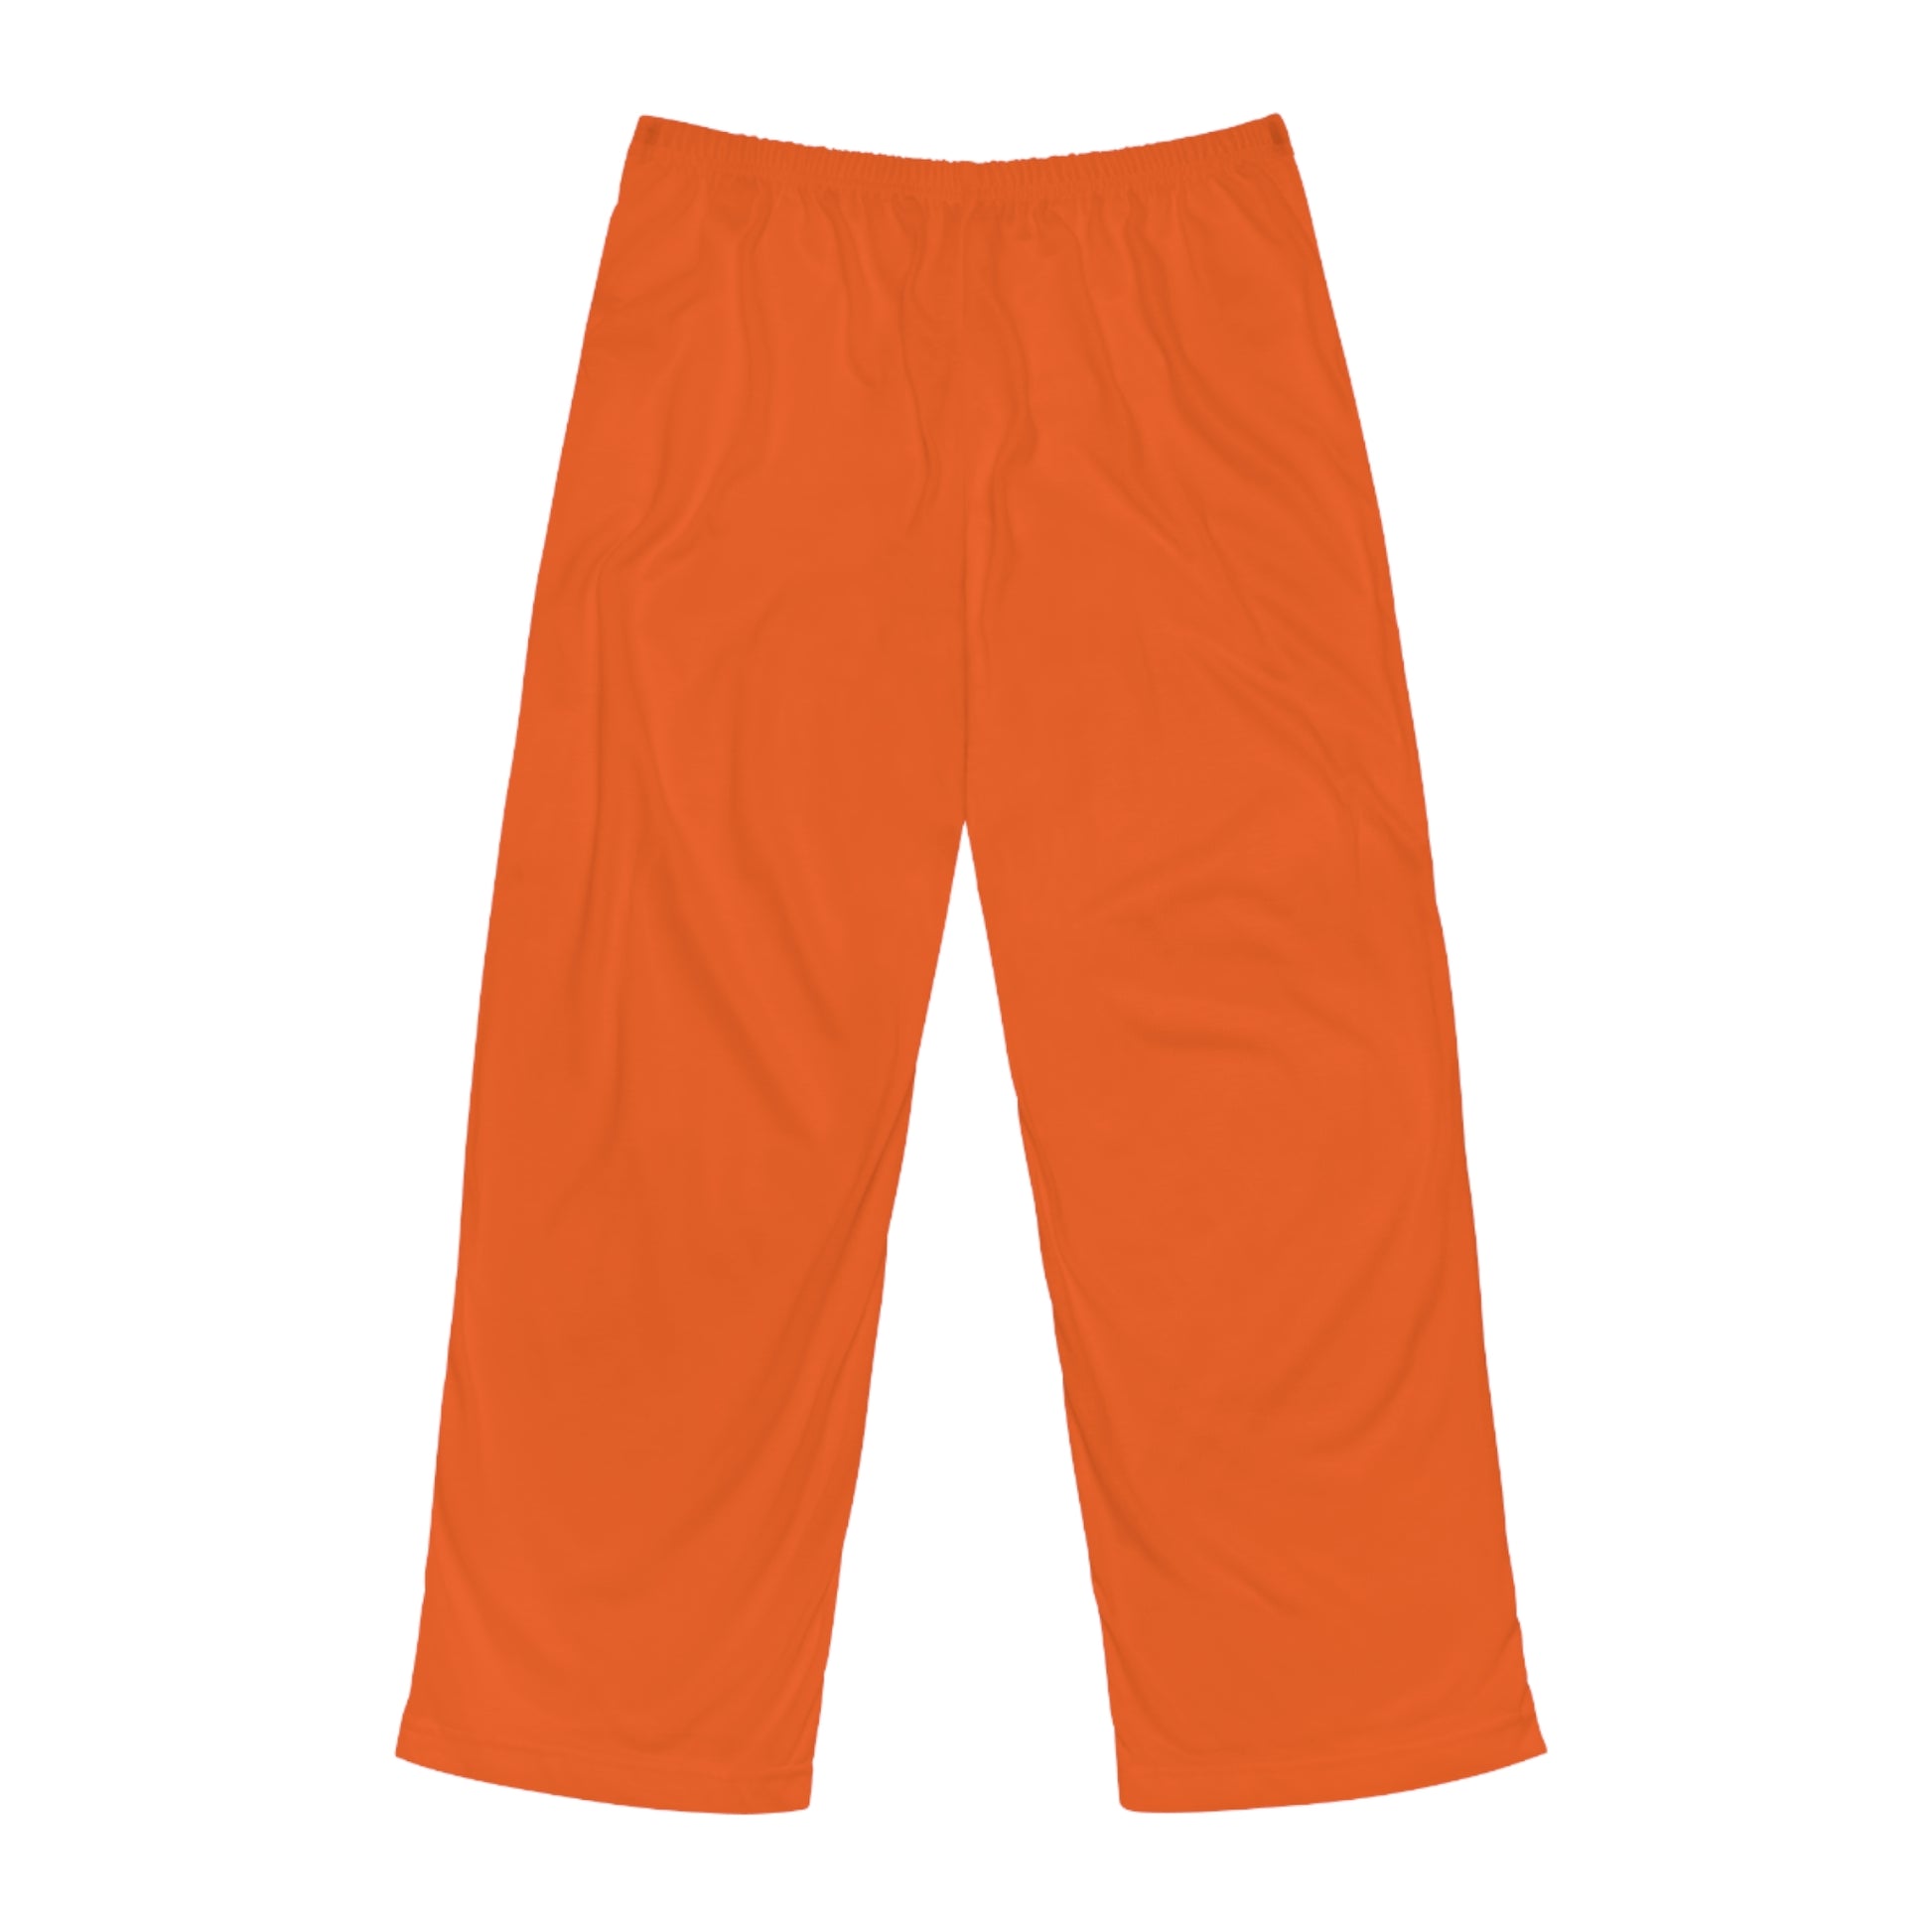 Men's Pajama Pants - Orange